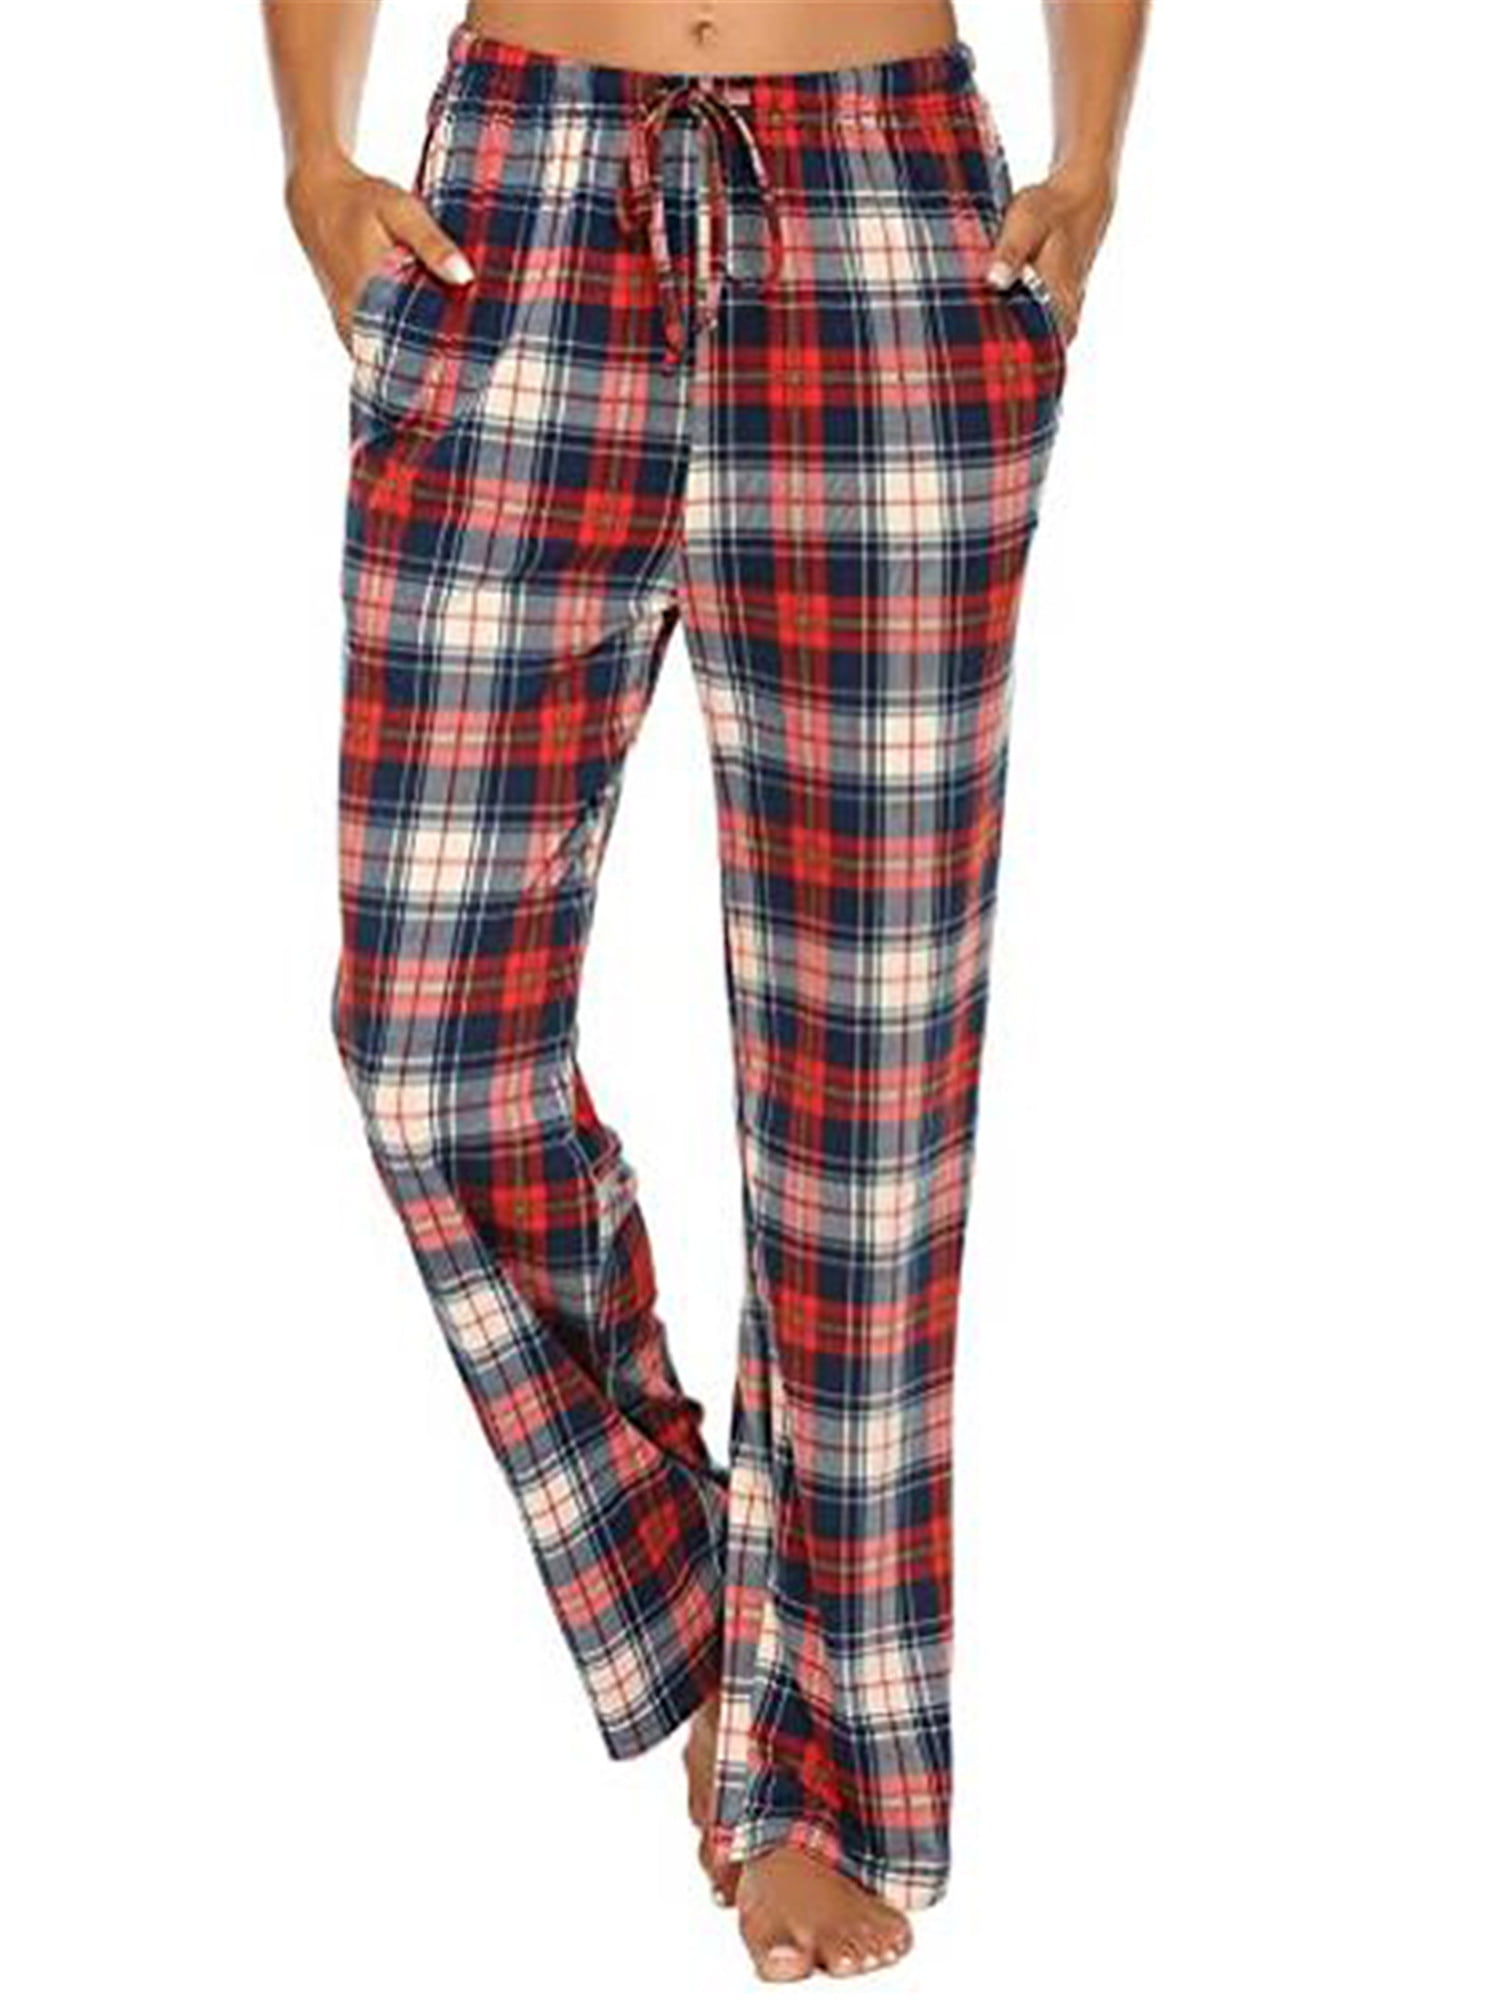 Womens Plaid Pajamas Pants with Pockets Lounge /& Sleep Pj Bottoms Comfy Soft Casual Drawstring Pjs Trousers